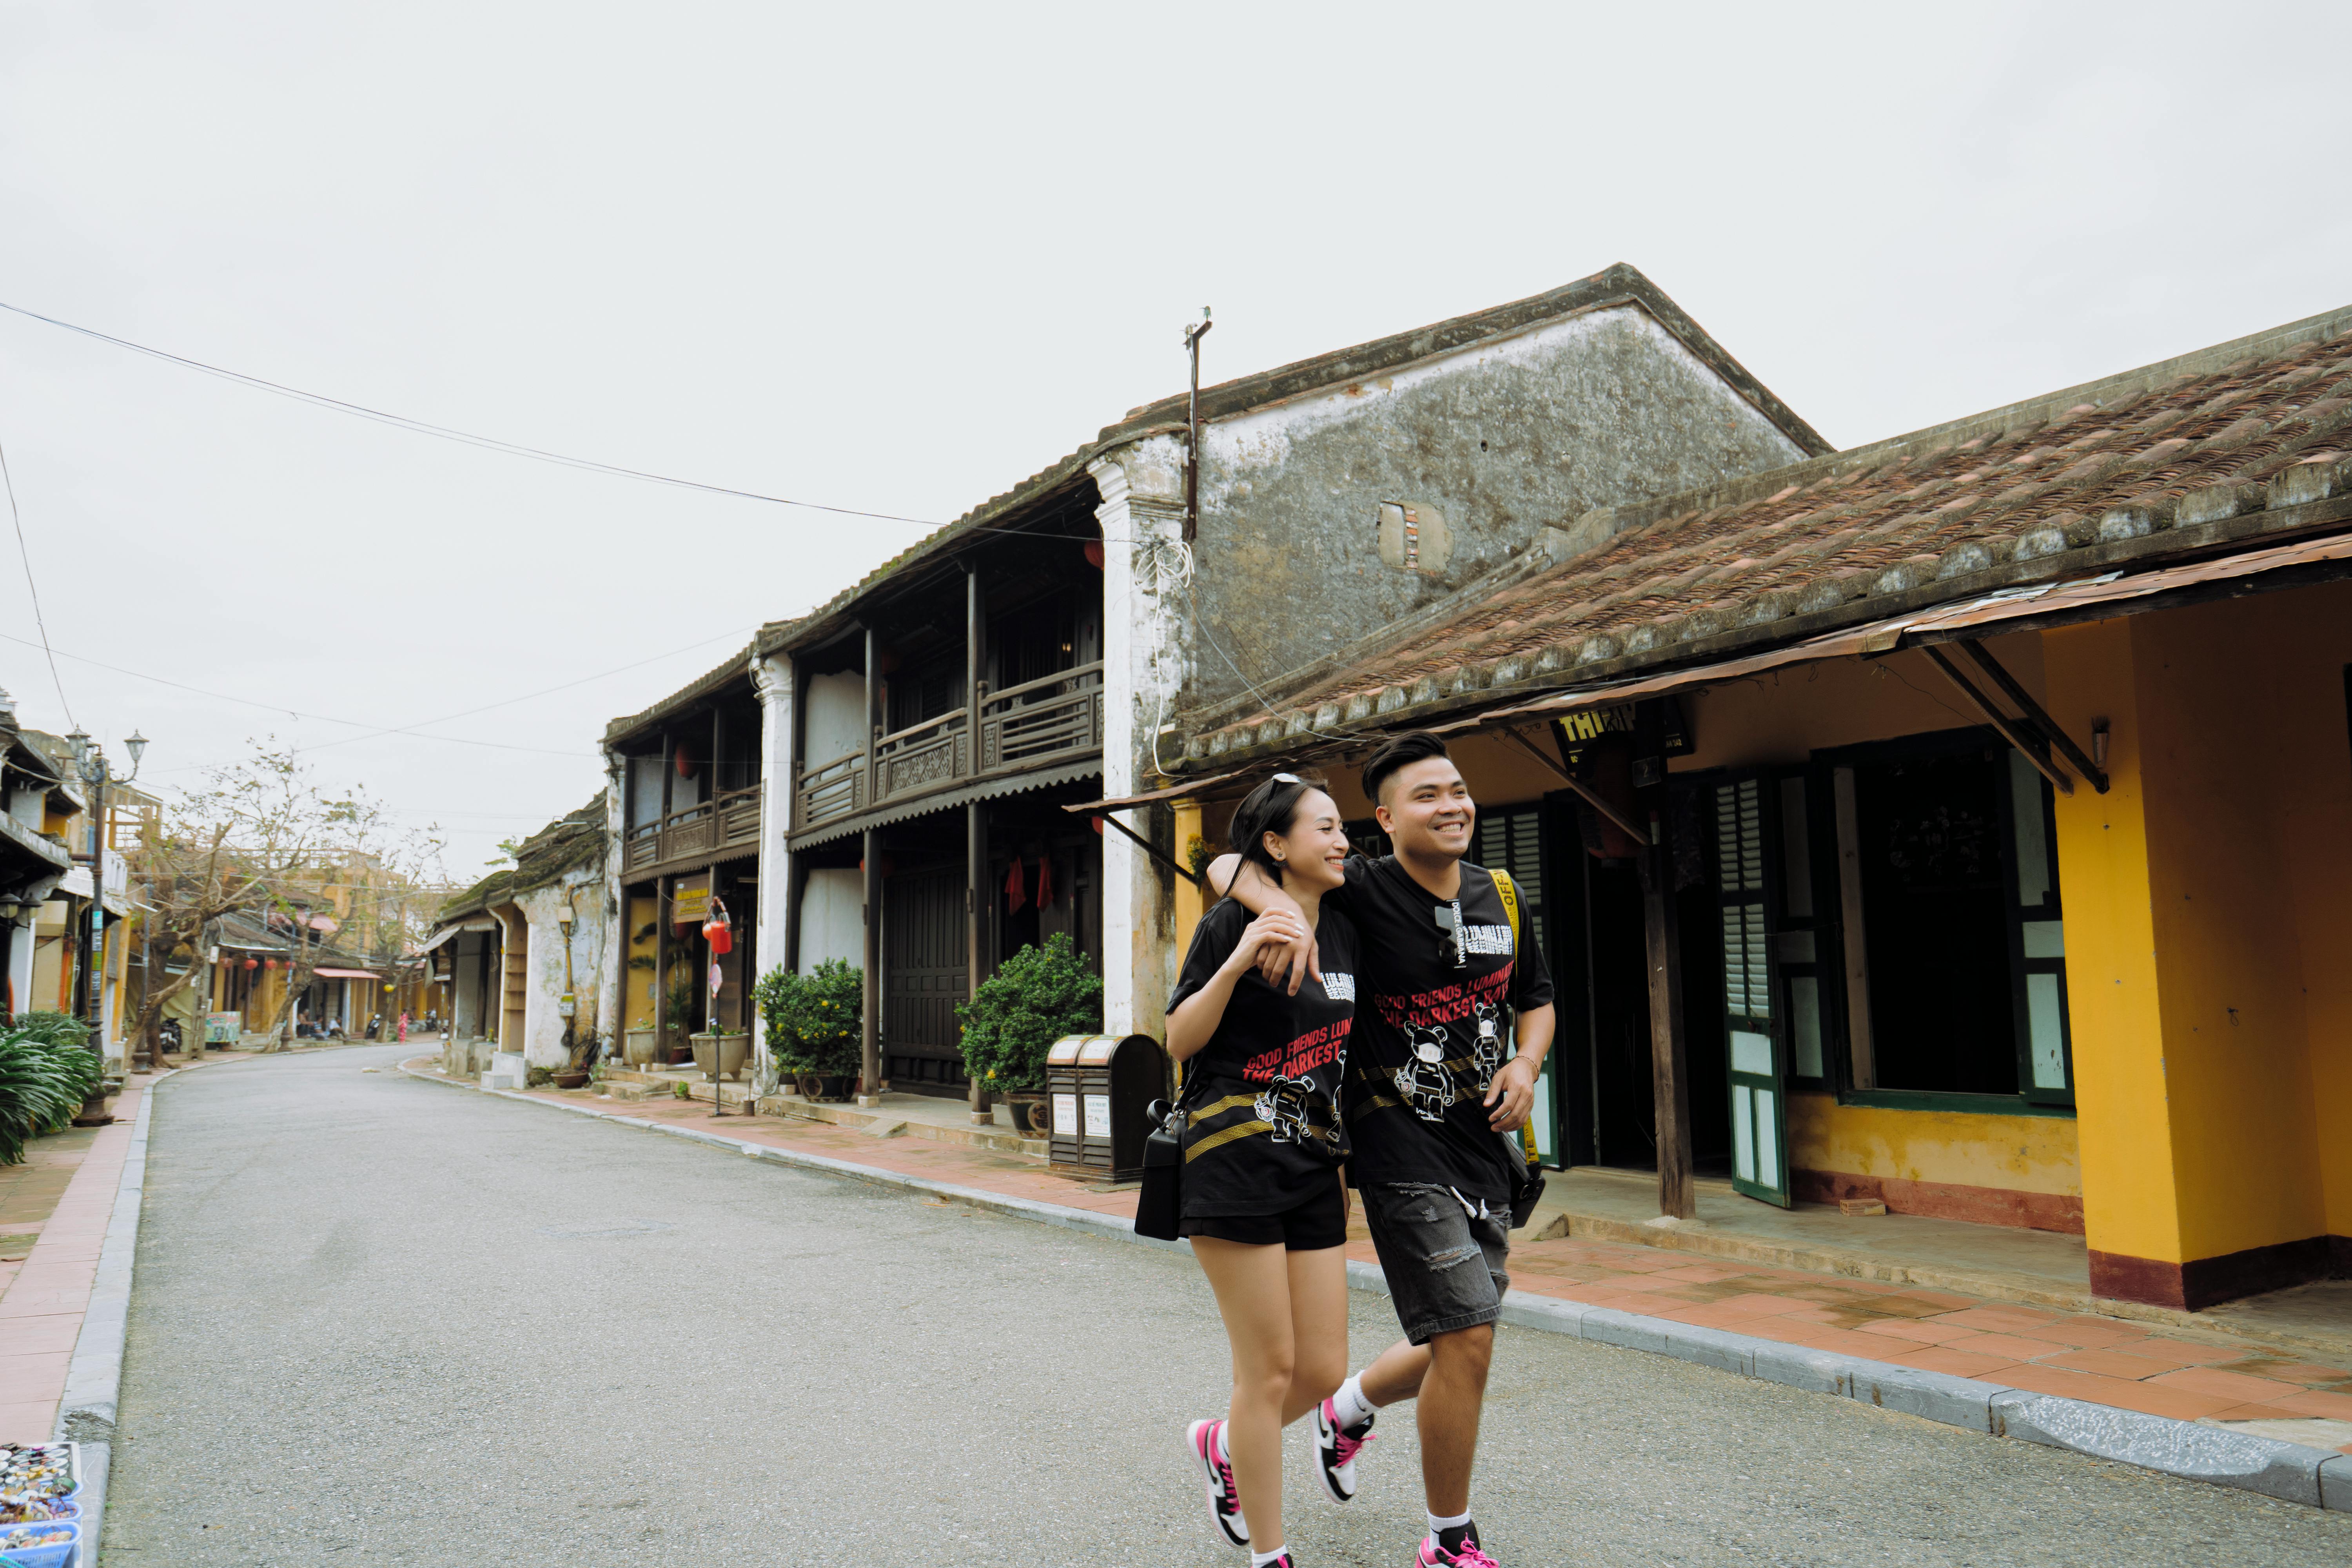 Joyful Asian couple embracing and walking on town street